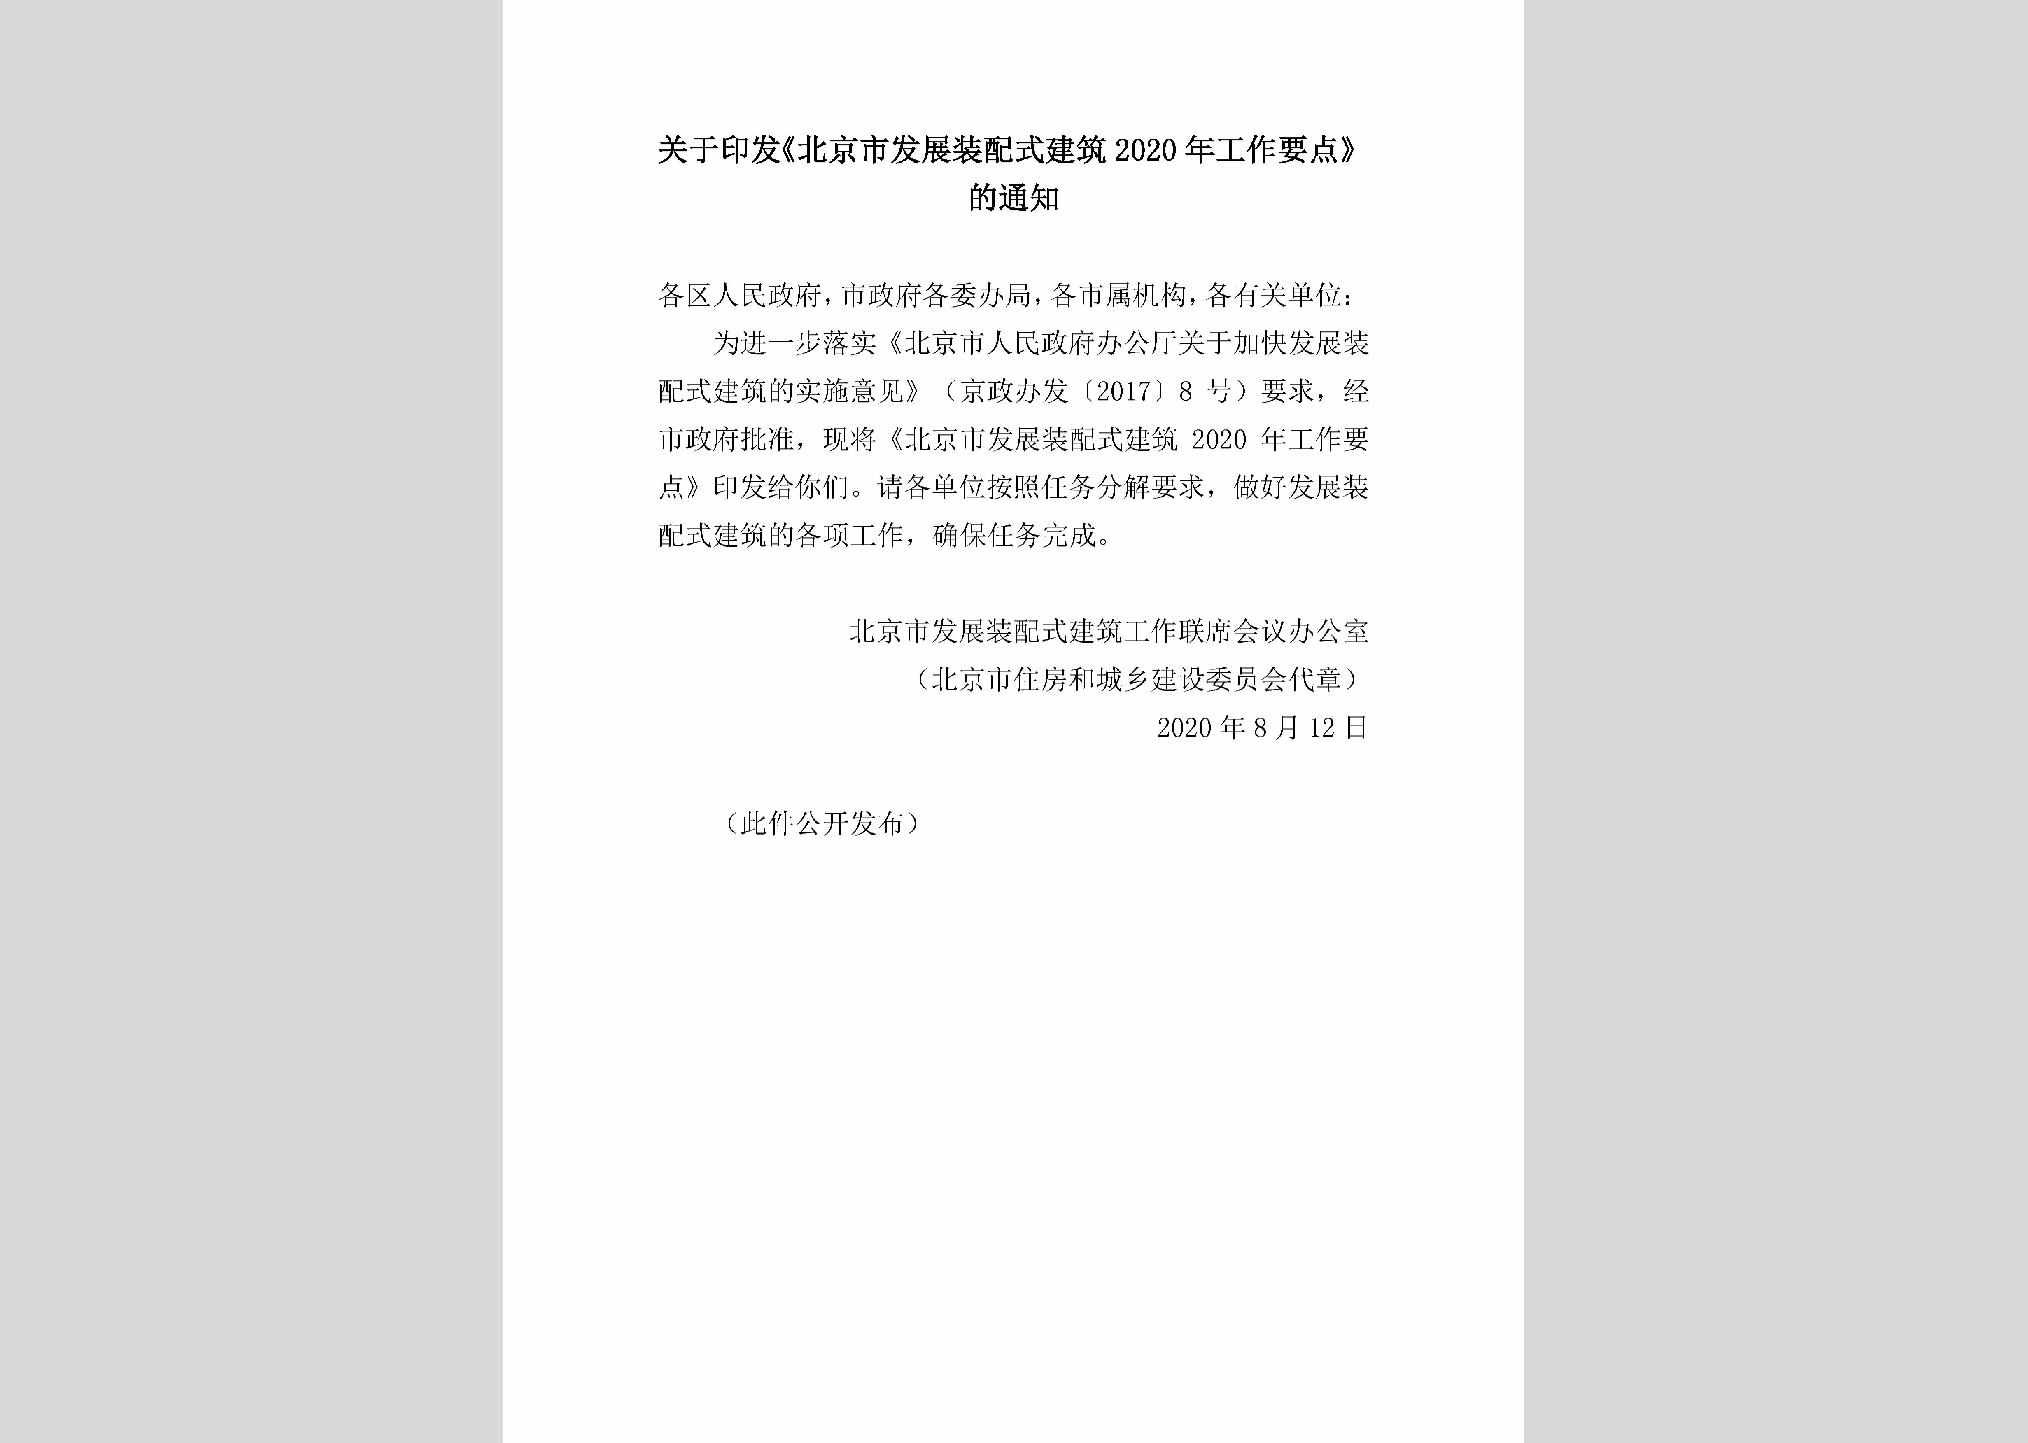 BJSFZZPS：关于印发《北京市发展装配式建筑2020年工作要点》的通知